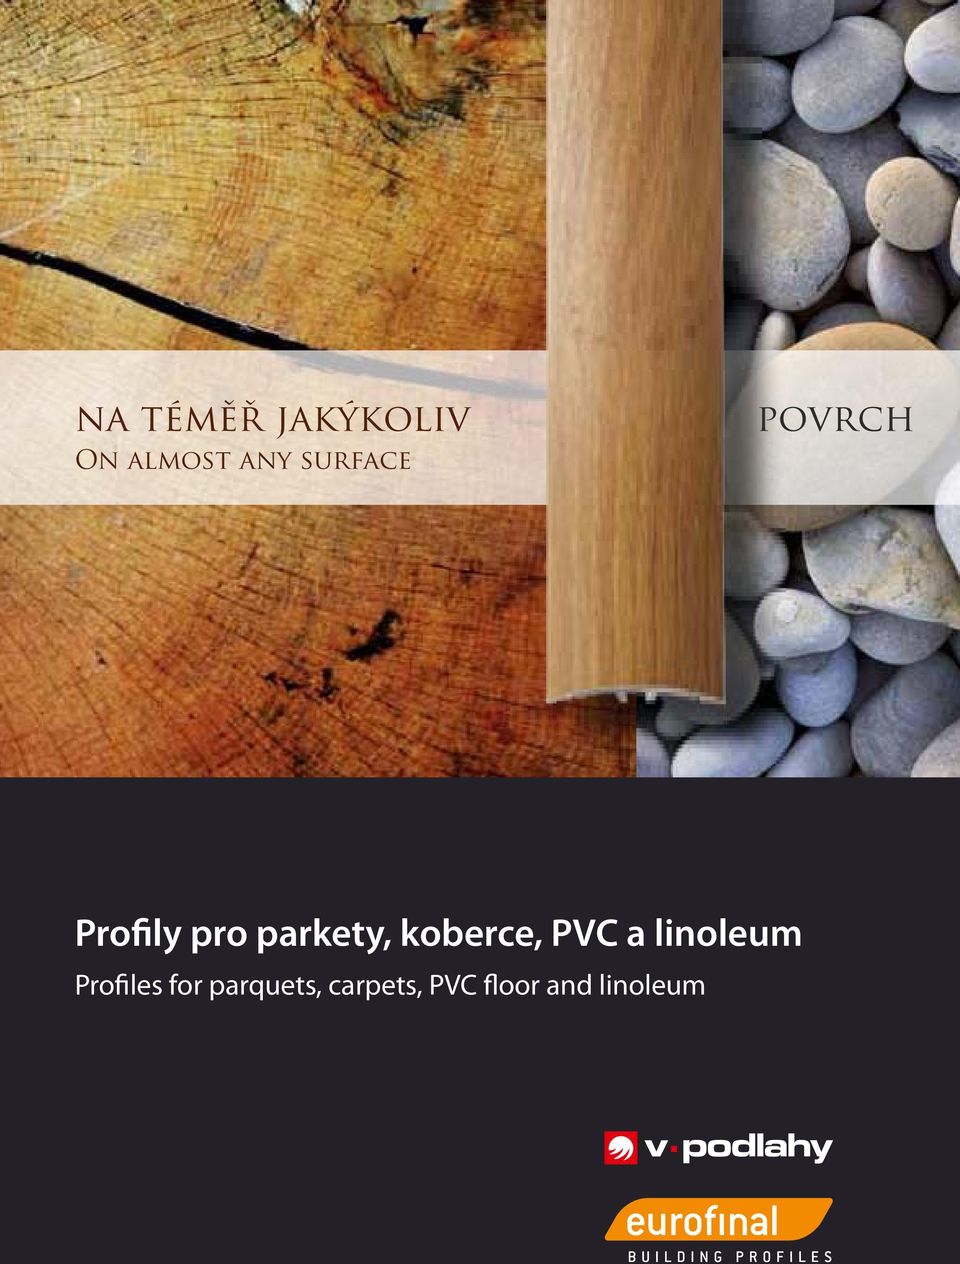 koberce, PVC a linoleum Profiles for